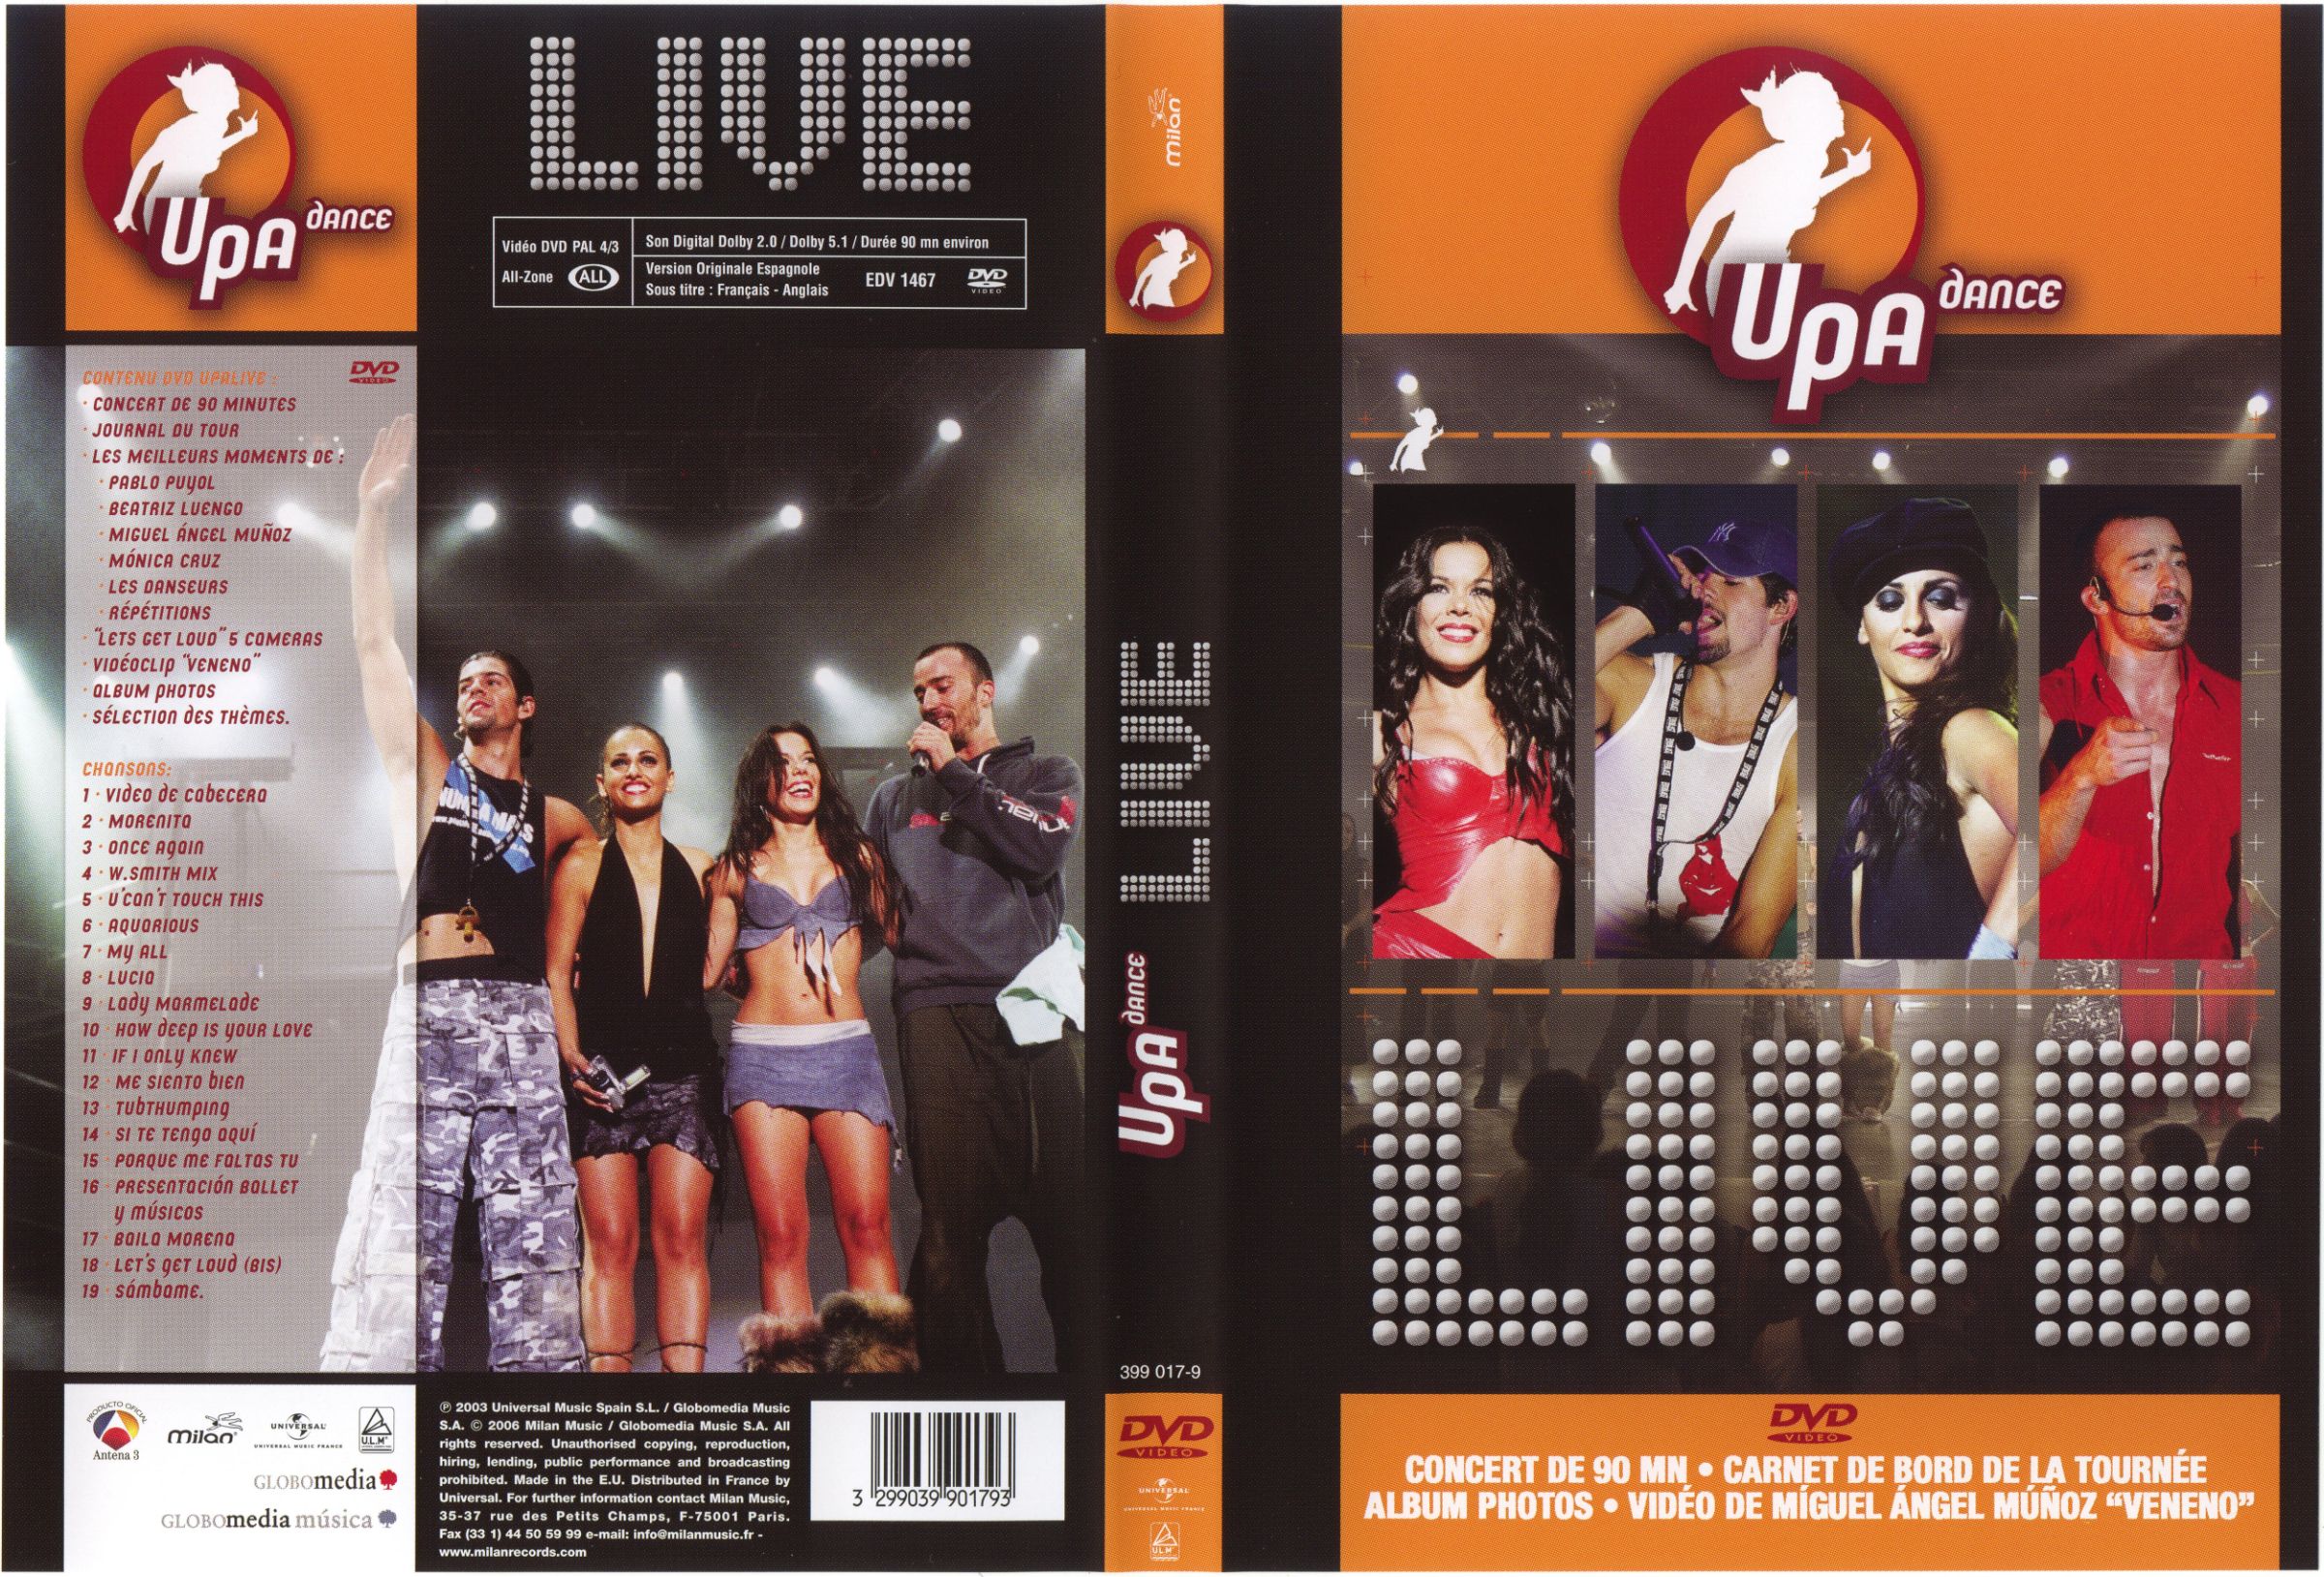 Jaquette DVD Upa Dance live